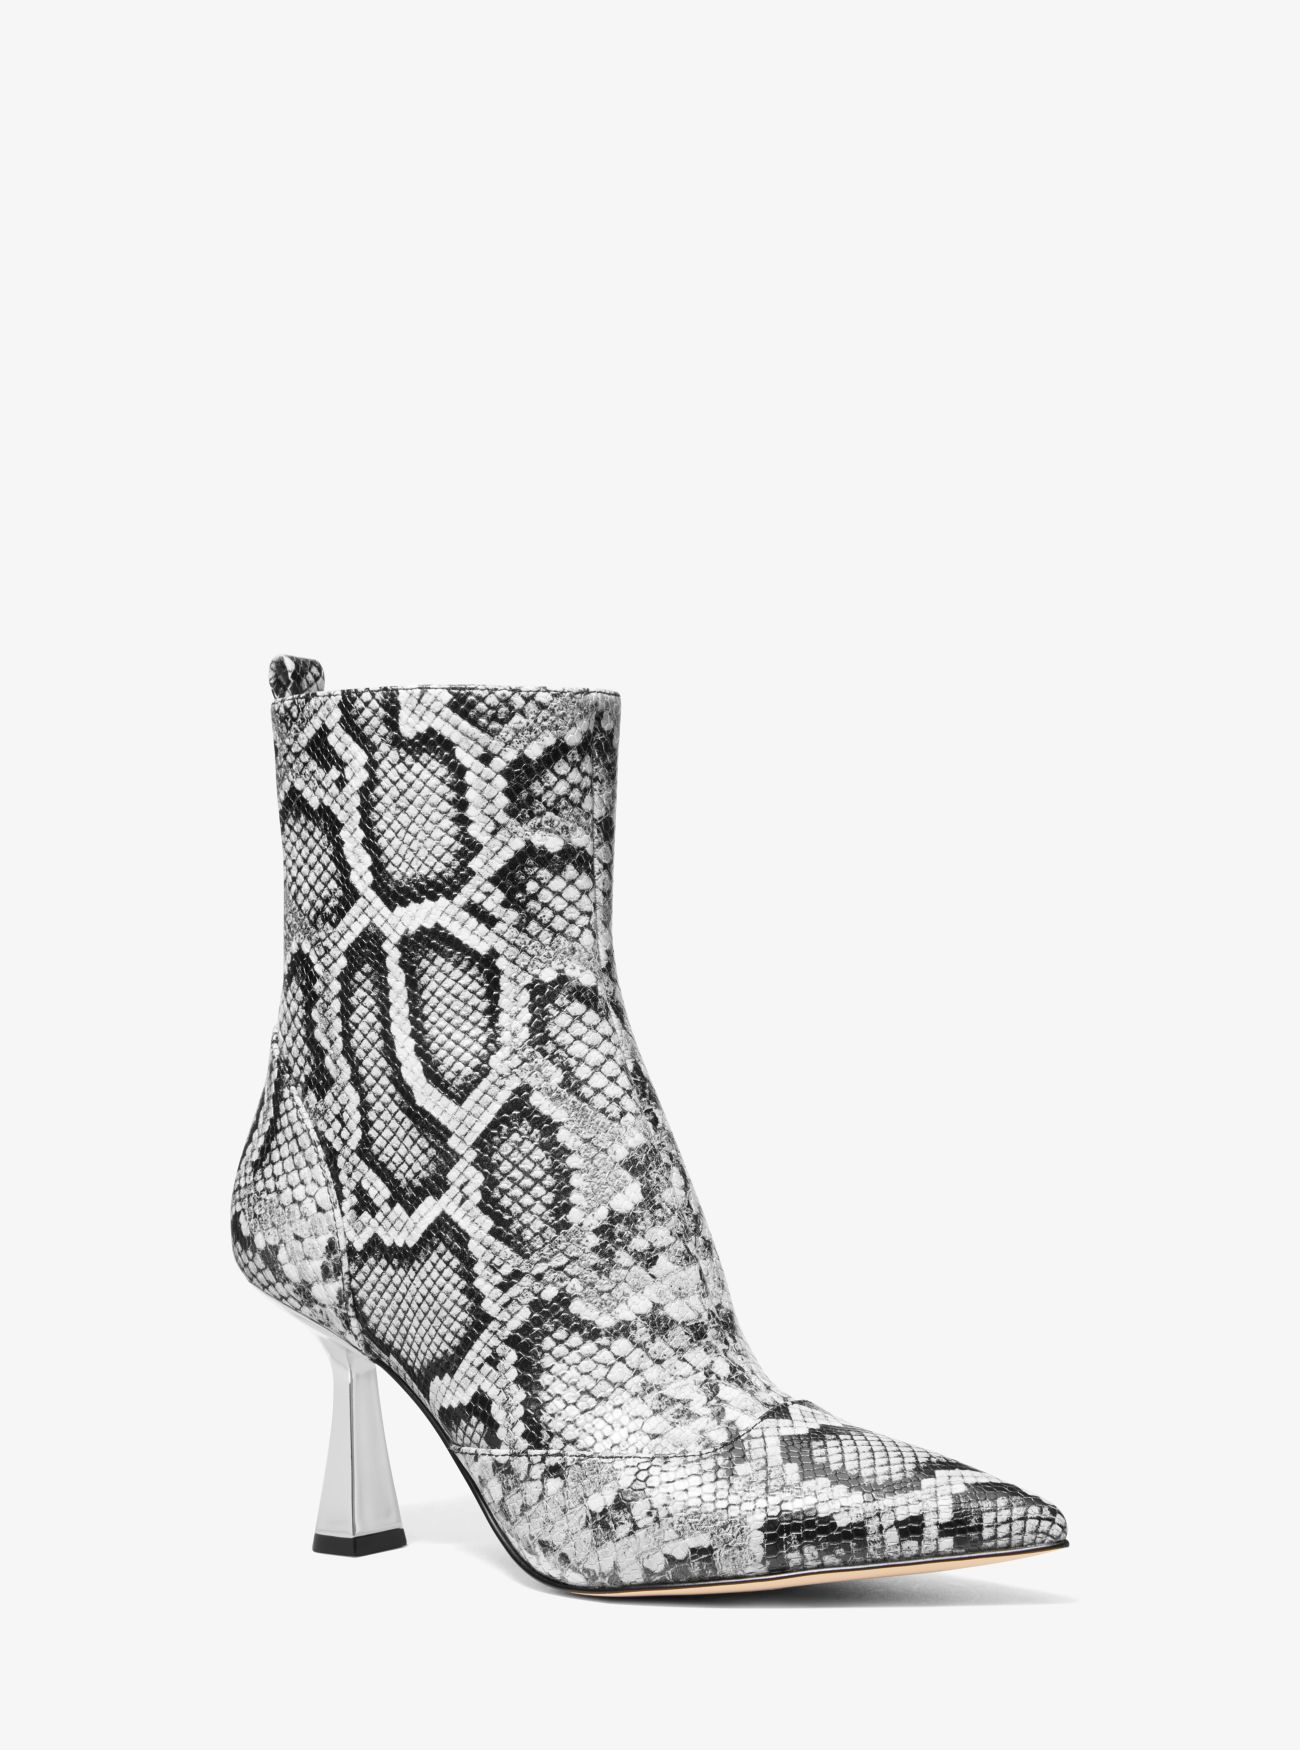 MK Clara Snake Embossed Leather Ankle Boot - Black - Michael Kors